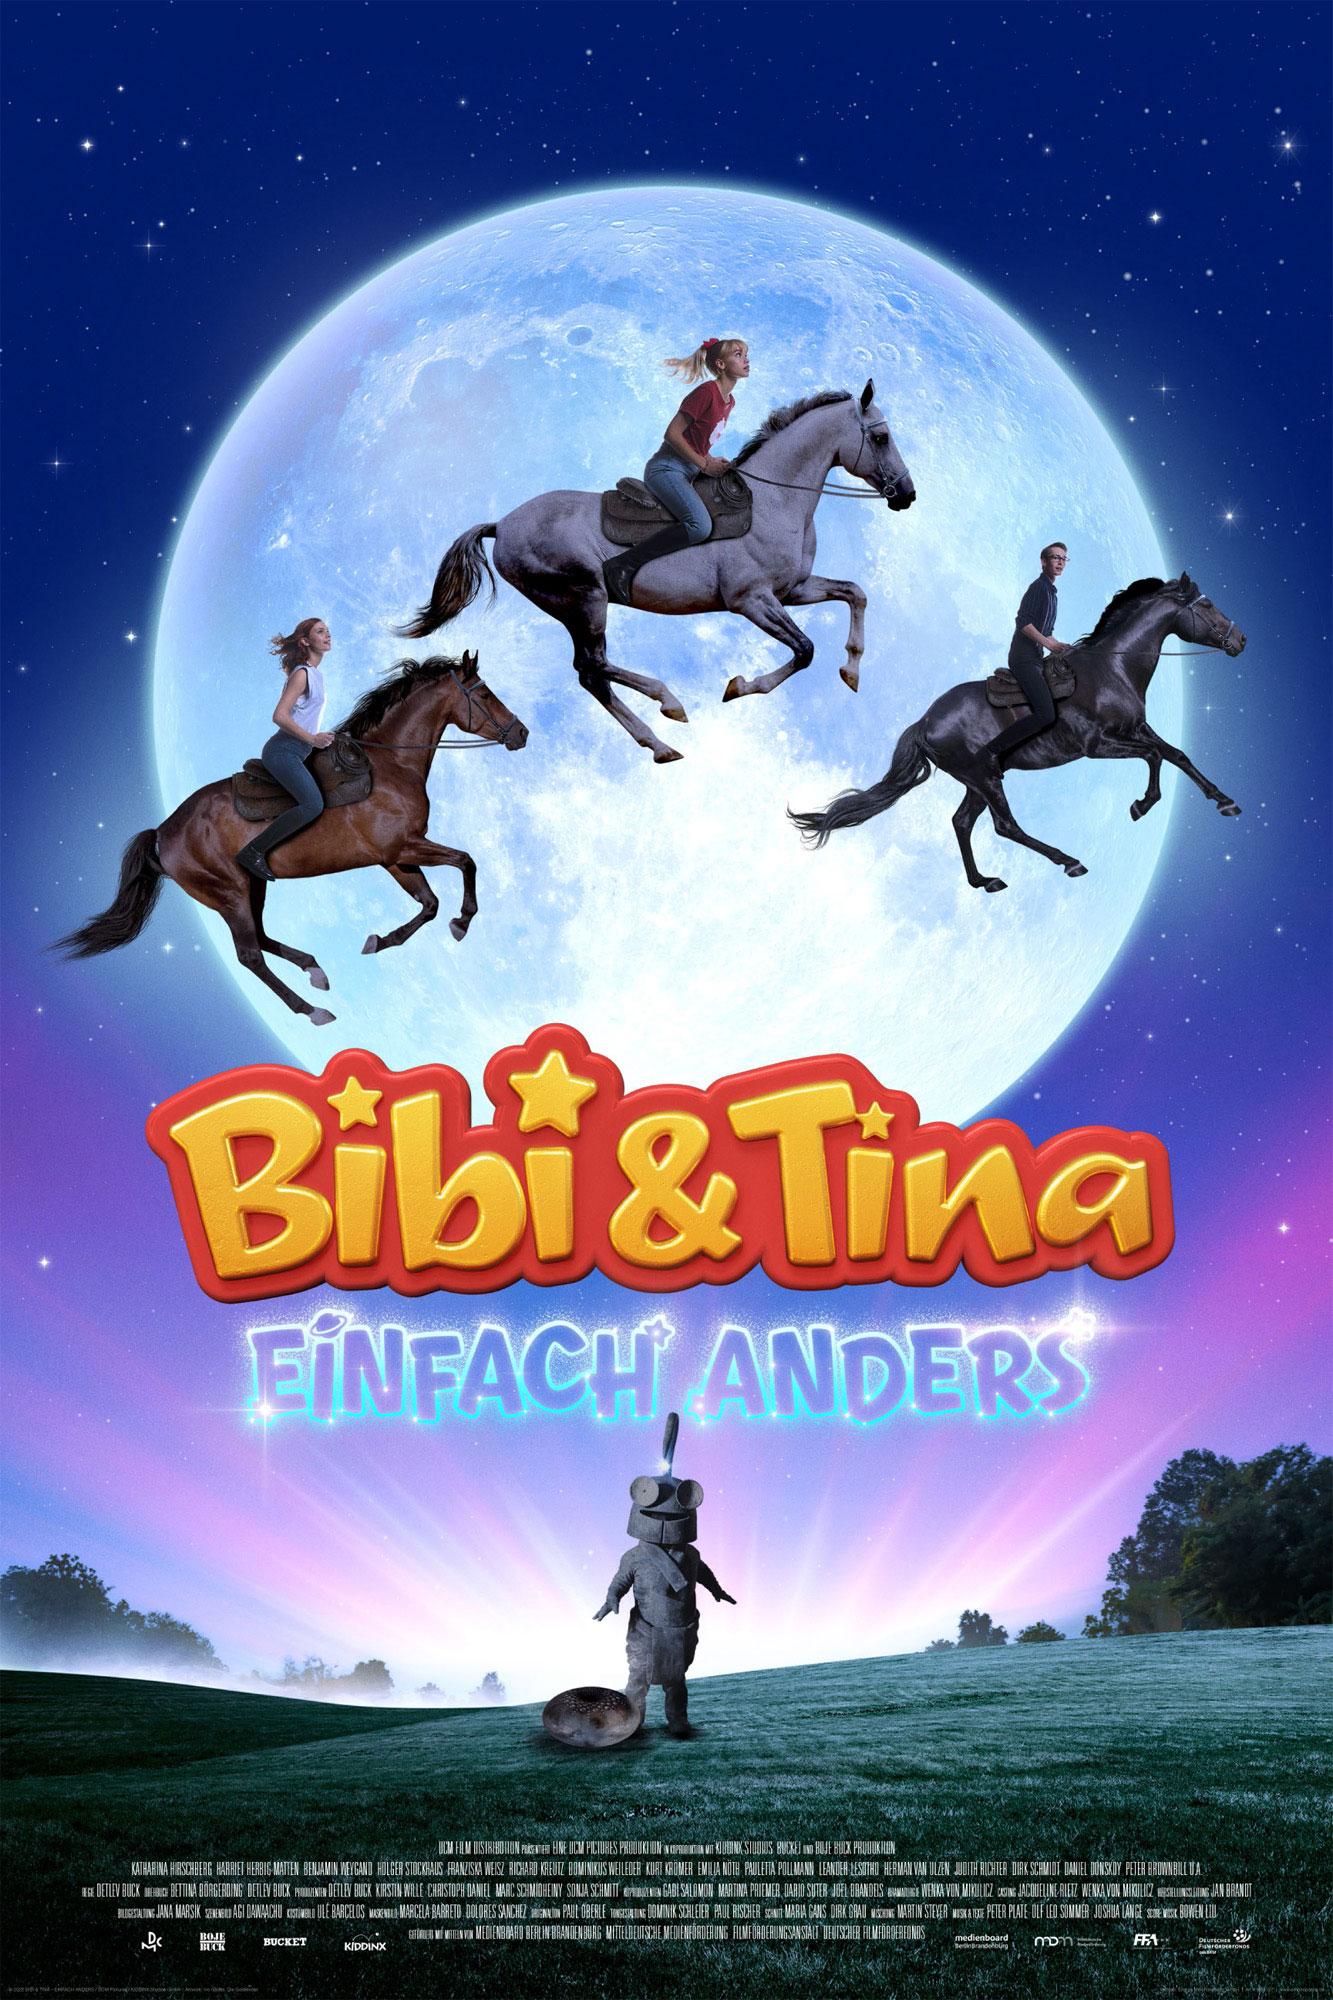 Teaser Tina & Einfach - Bibi - Anders